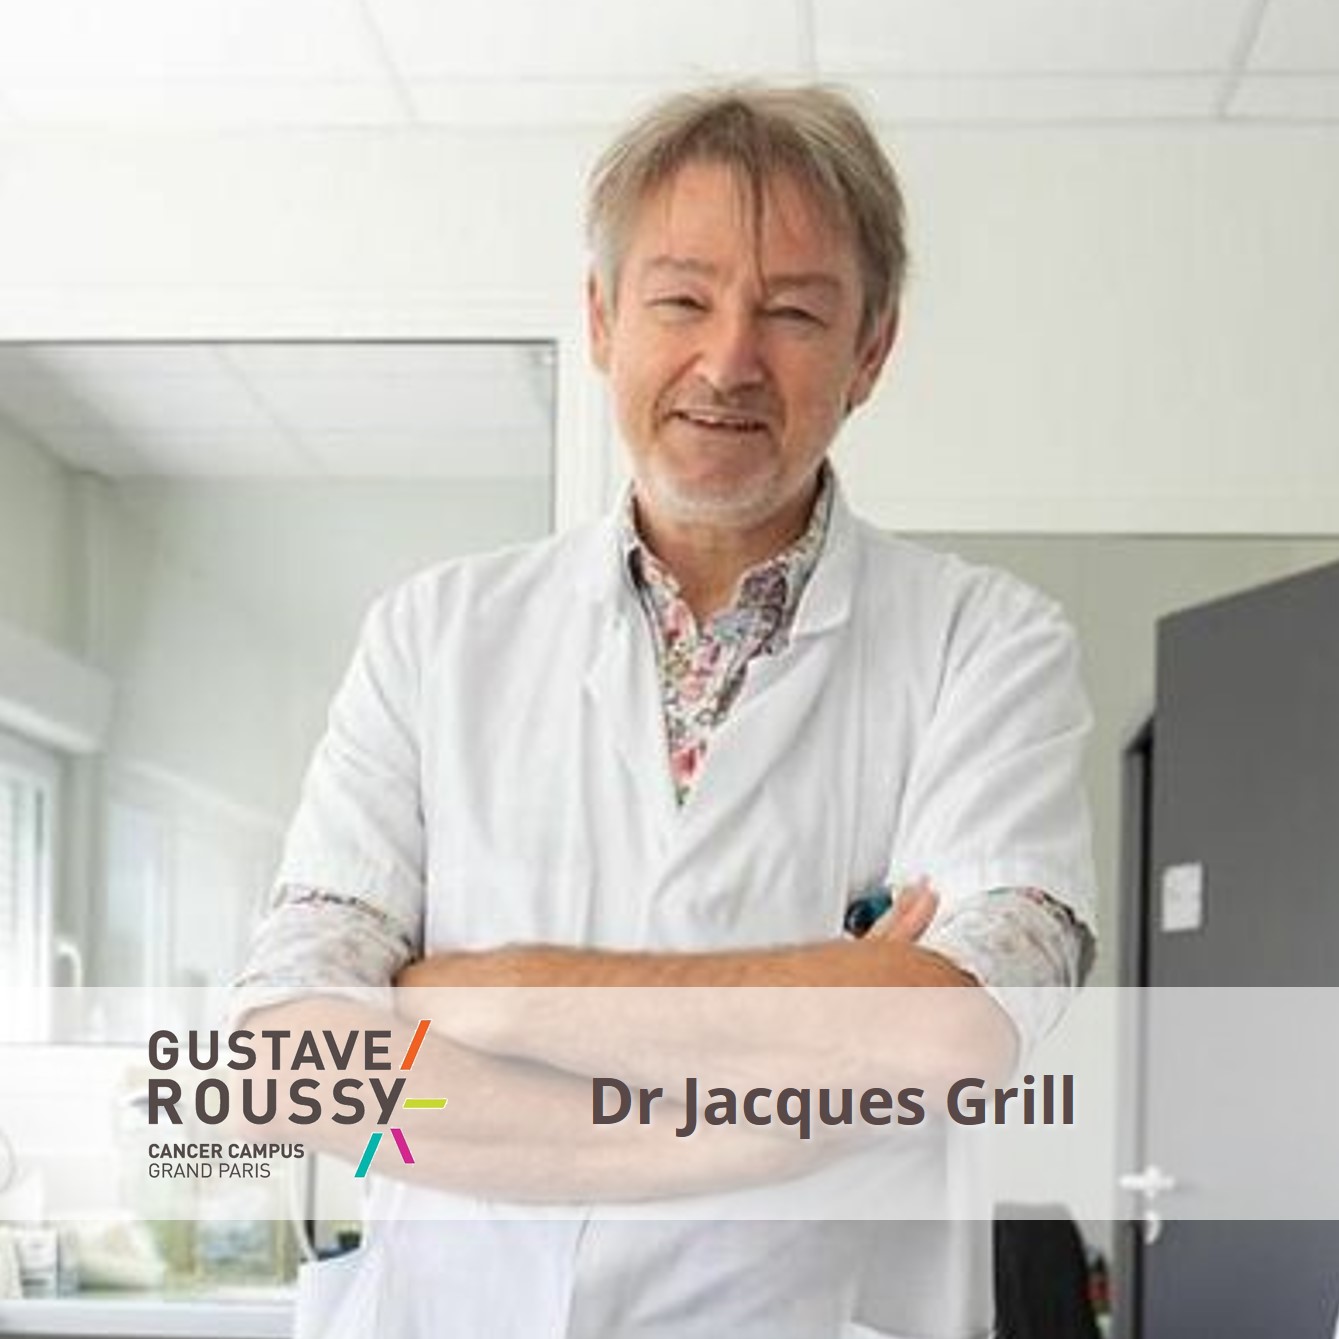 dr jacques grill gitc